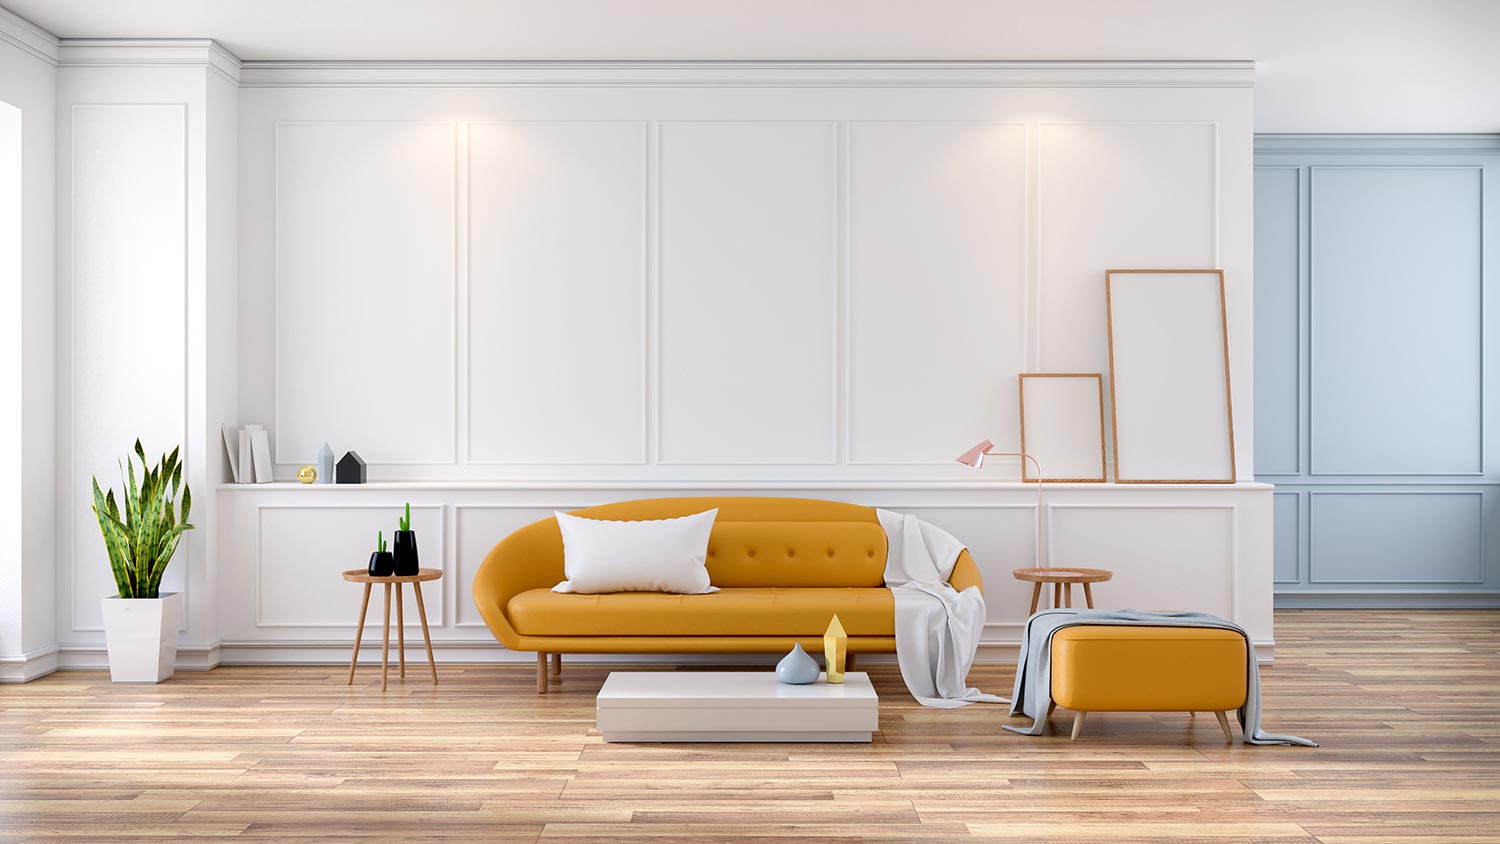 Modern mid century room interior with yellow sofa